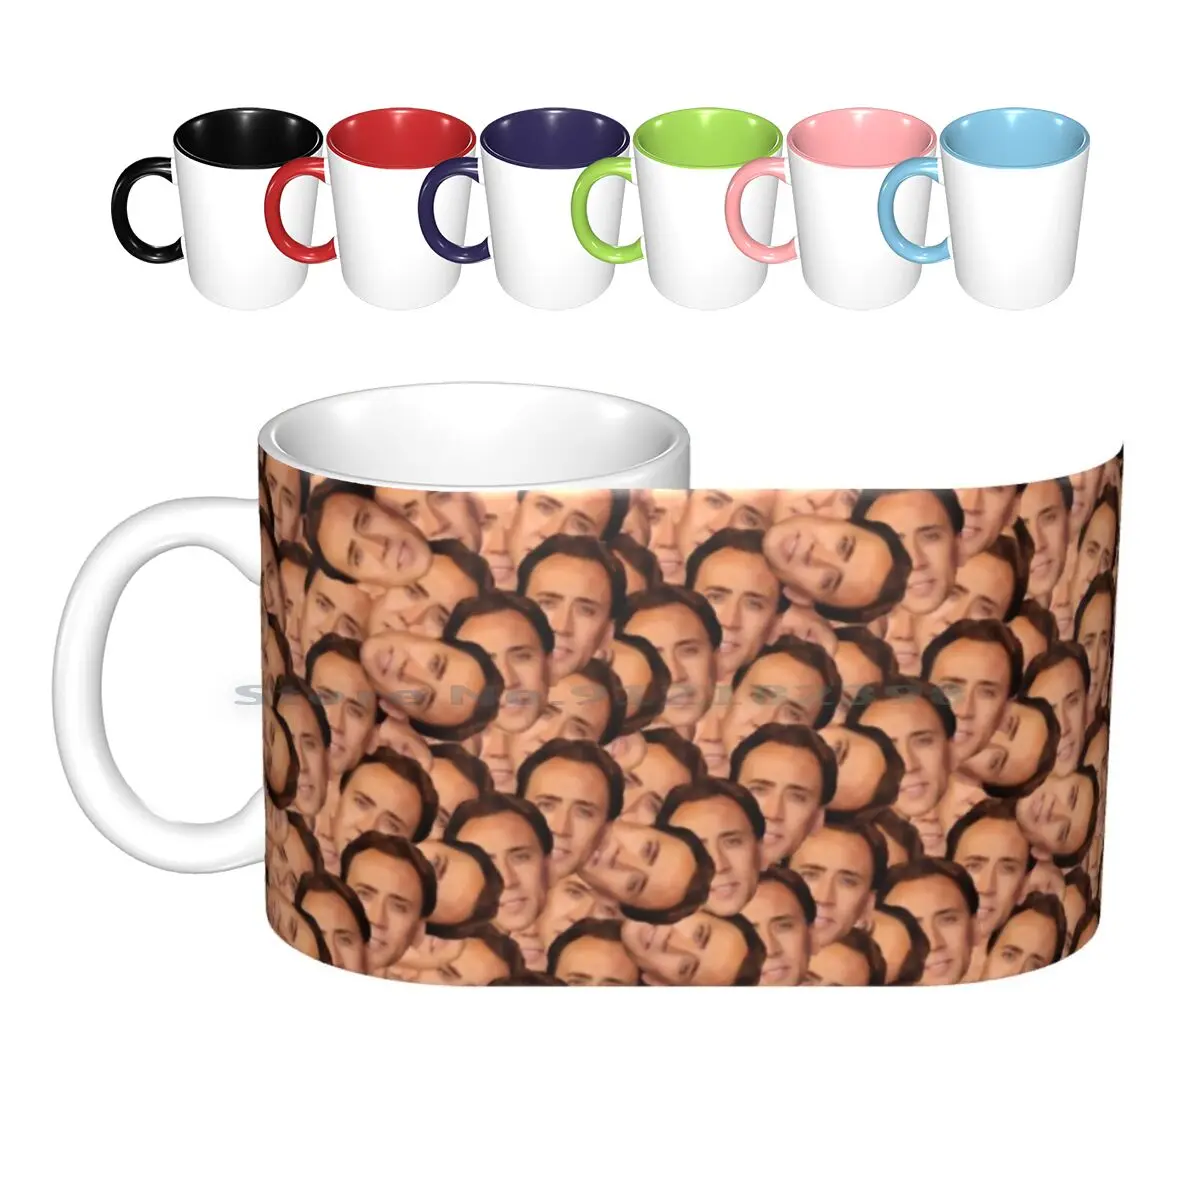 

Nicolas Cage Texture ( For All Your Cage Needs ) Ceramic Mugs Coffee Cups Milk Tea Mug Nicolascage Nicolas Cage Celebrity Handy